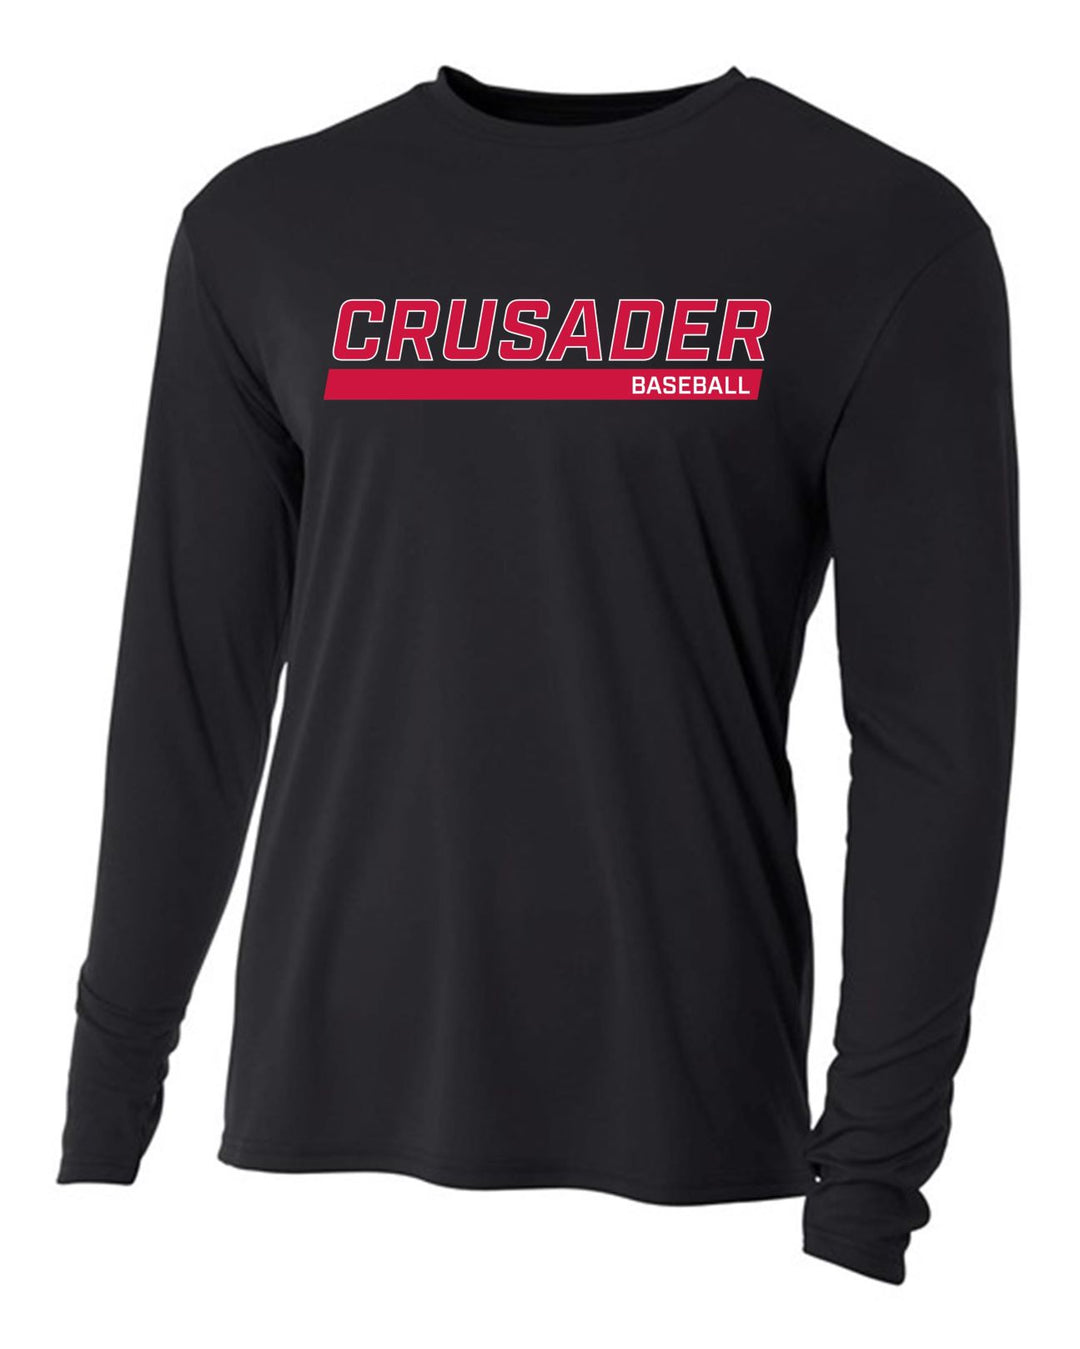 WCU Baseball Men's Long-Sleeve Performance Shirt WCU Baseball Black CRUSADER - Third Coast Soccer